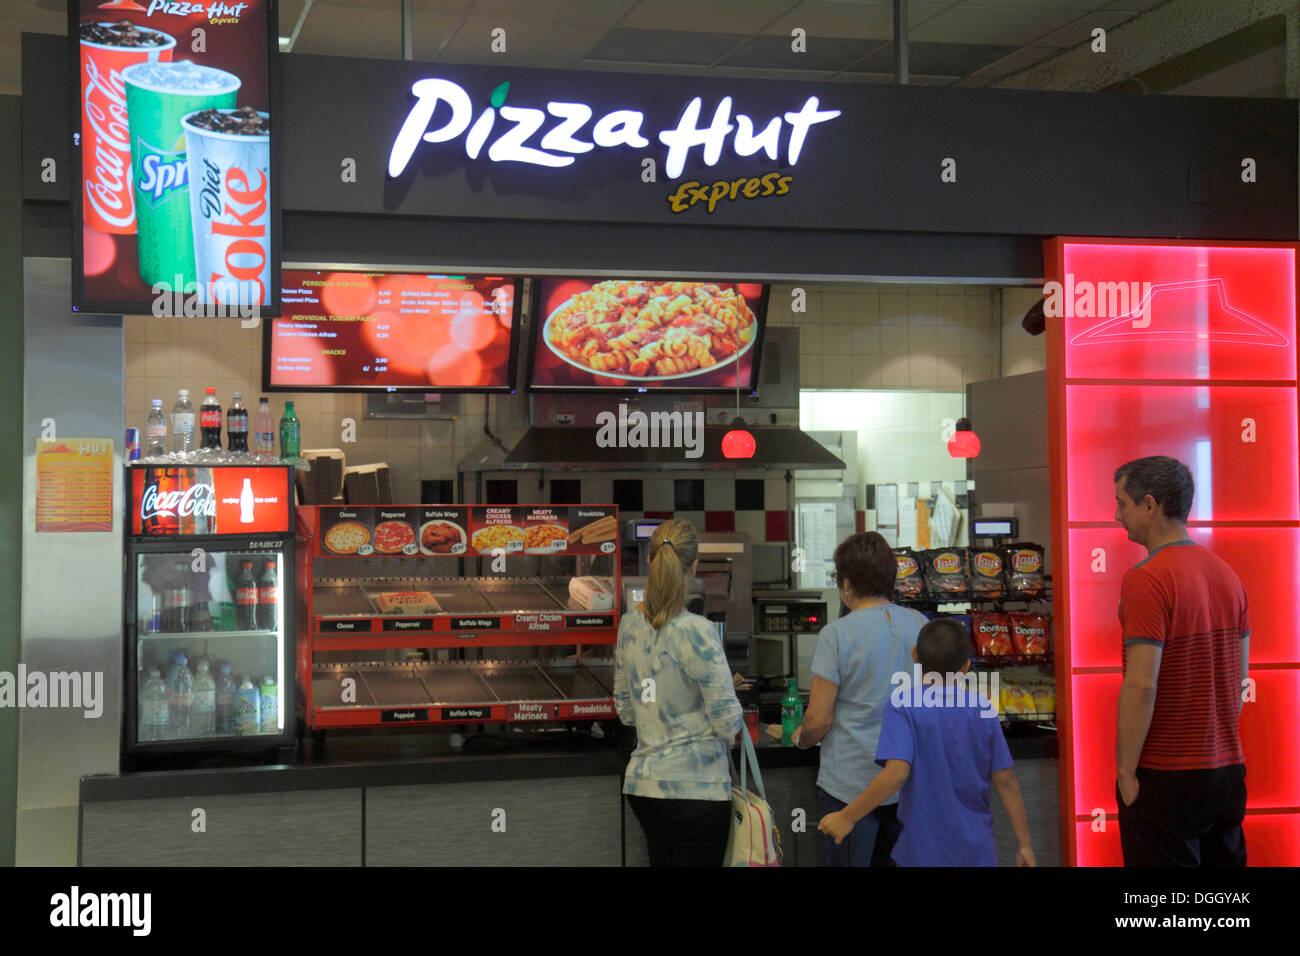 Miami International Airport Terminal Pizza Hut Express